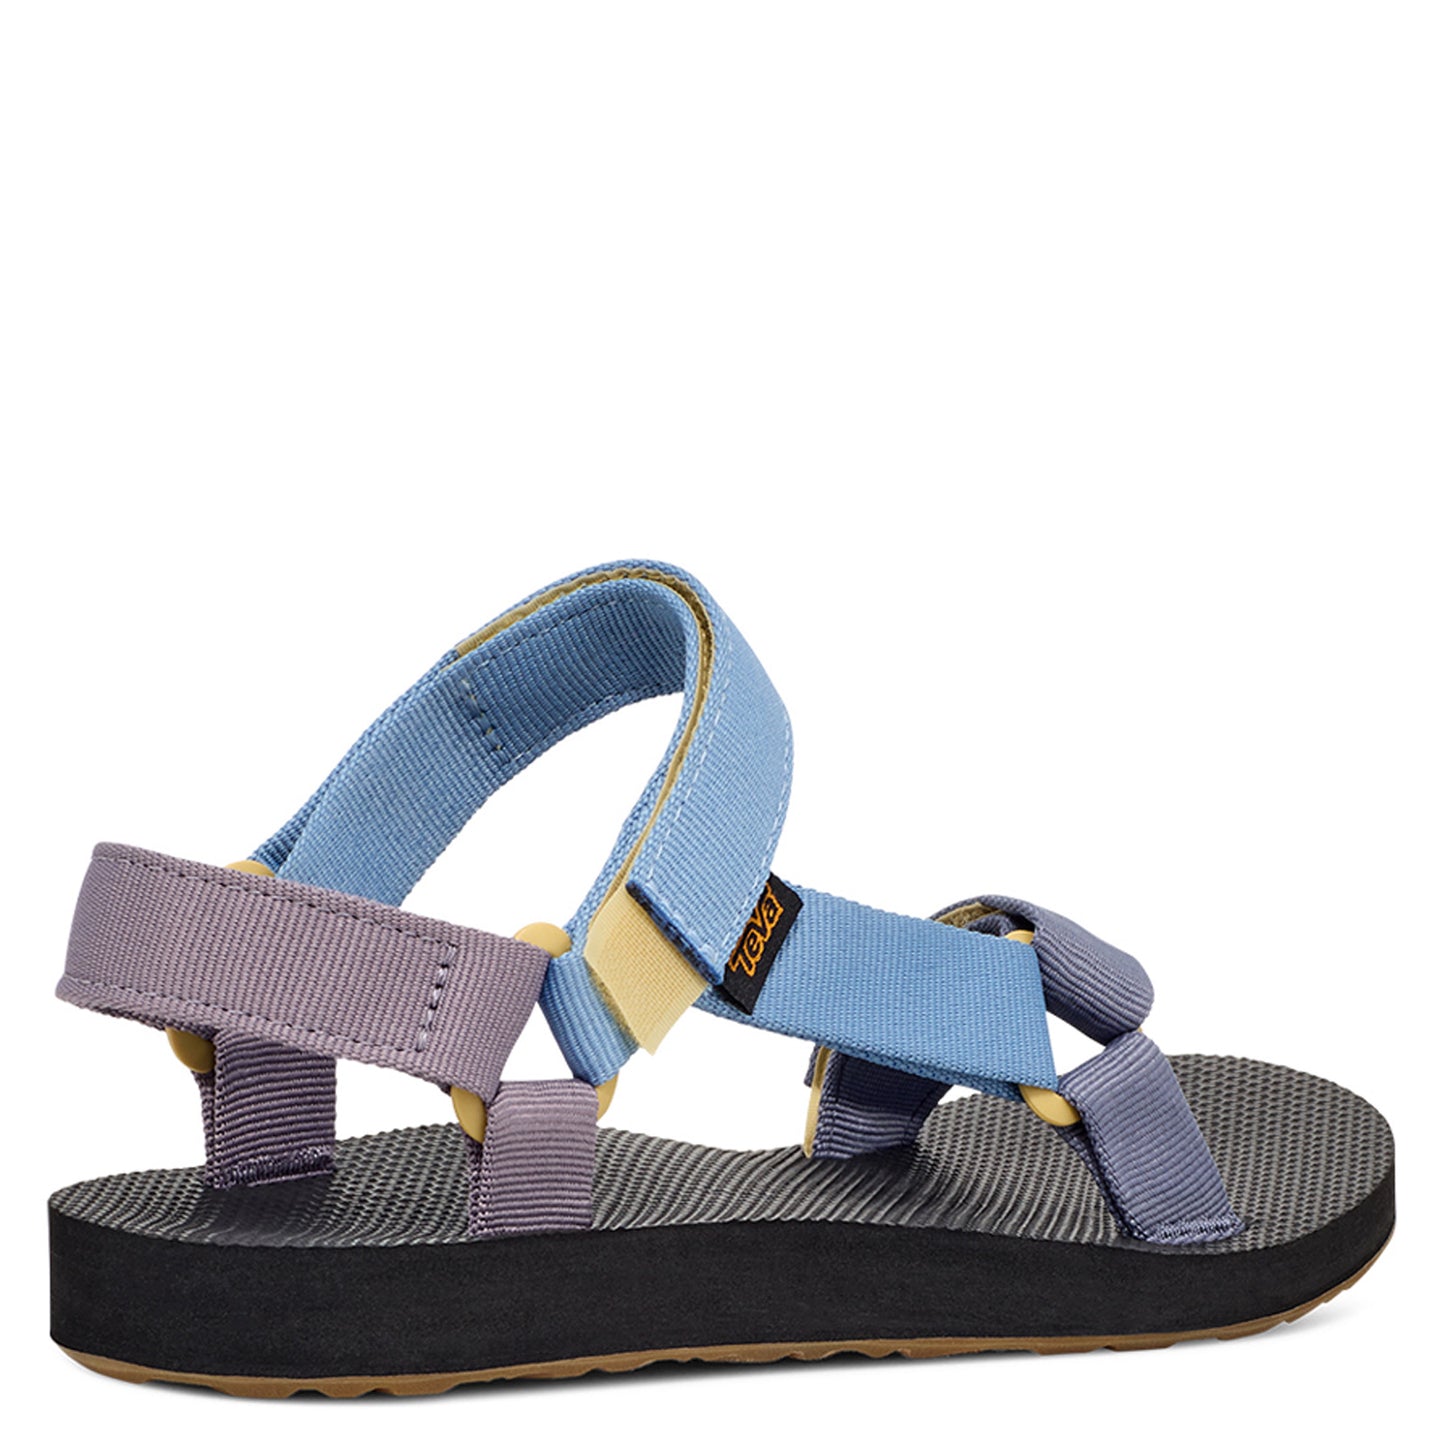 Peltz Shoes  Women's Teva Original Universal Sandal BLISSFUL BLUE MULTI 1003987-BFLB